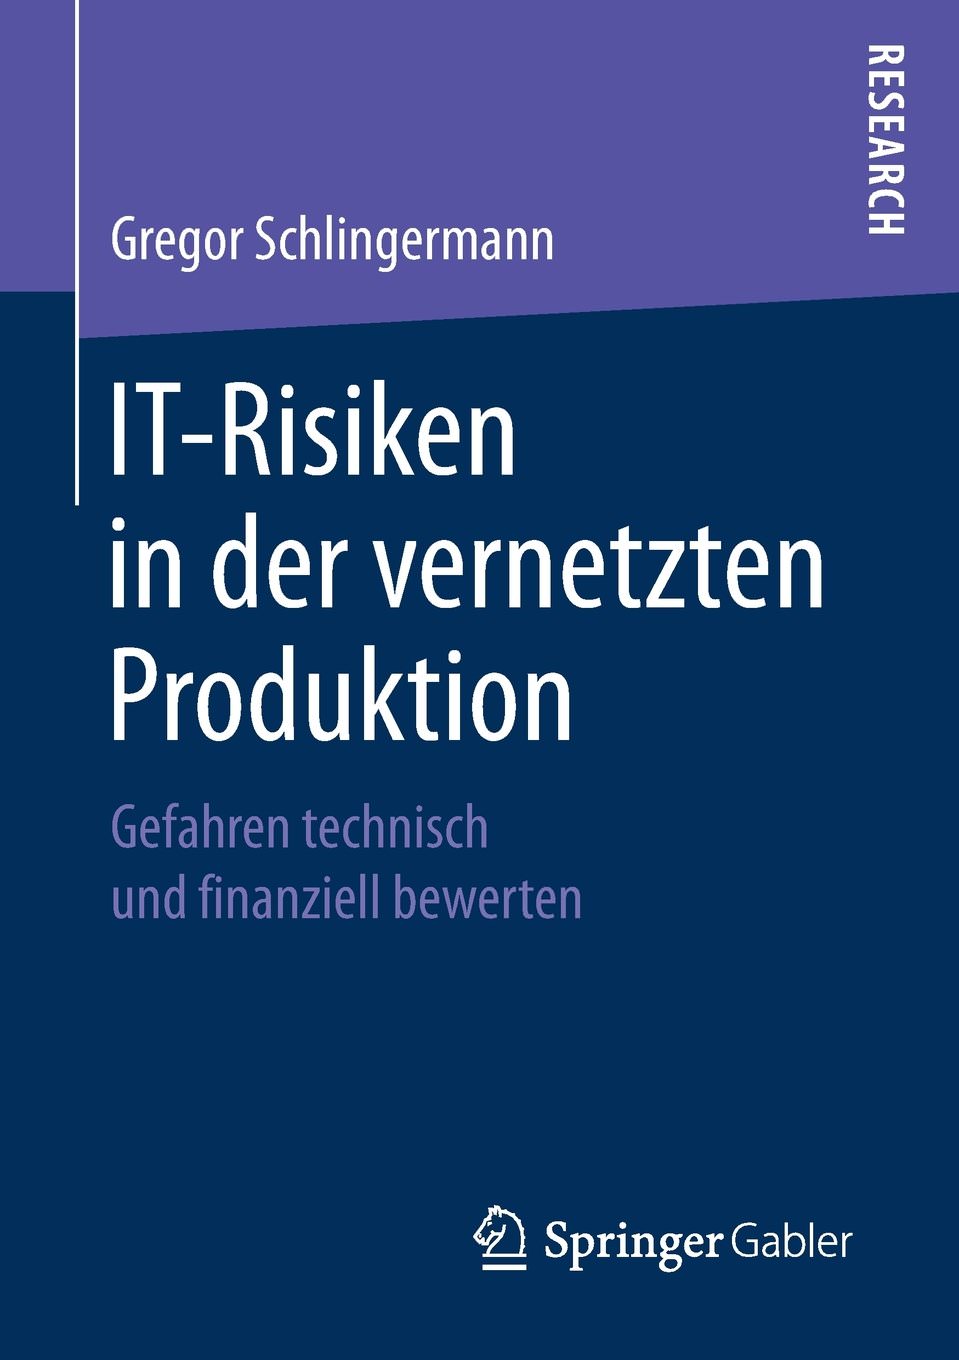 Georg Schlingermann: IT-Risiken in der vernetzten Produktion. Springer Gabler